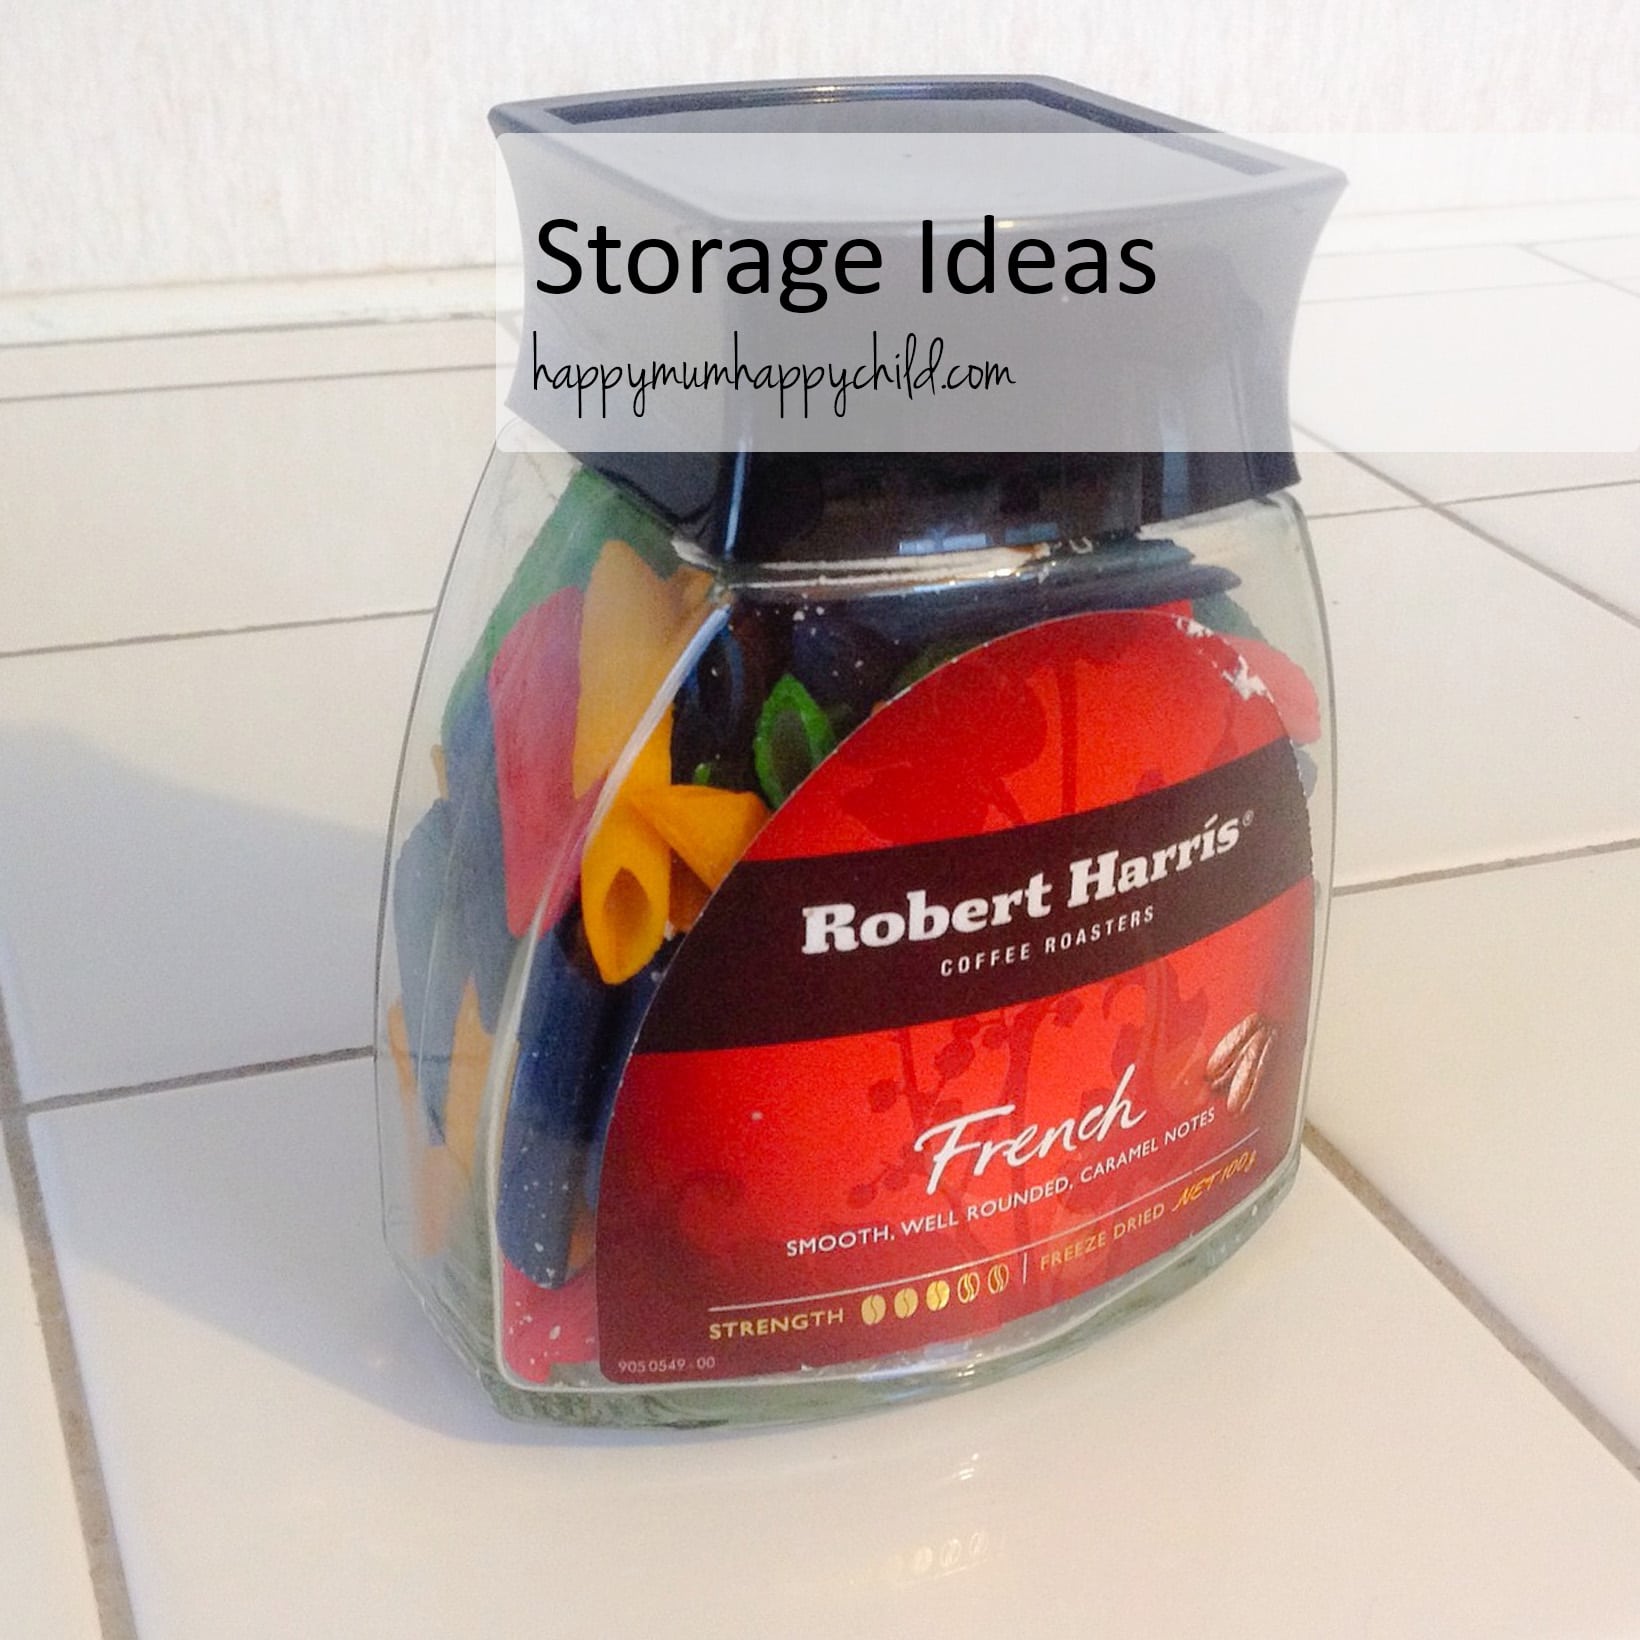 Storage Ideas EDITED